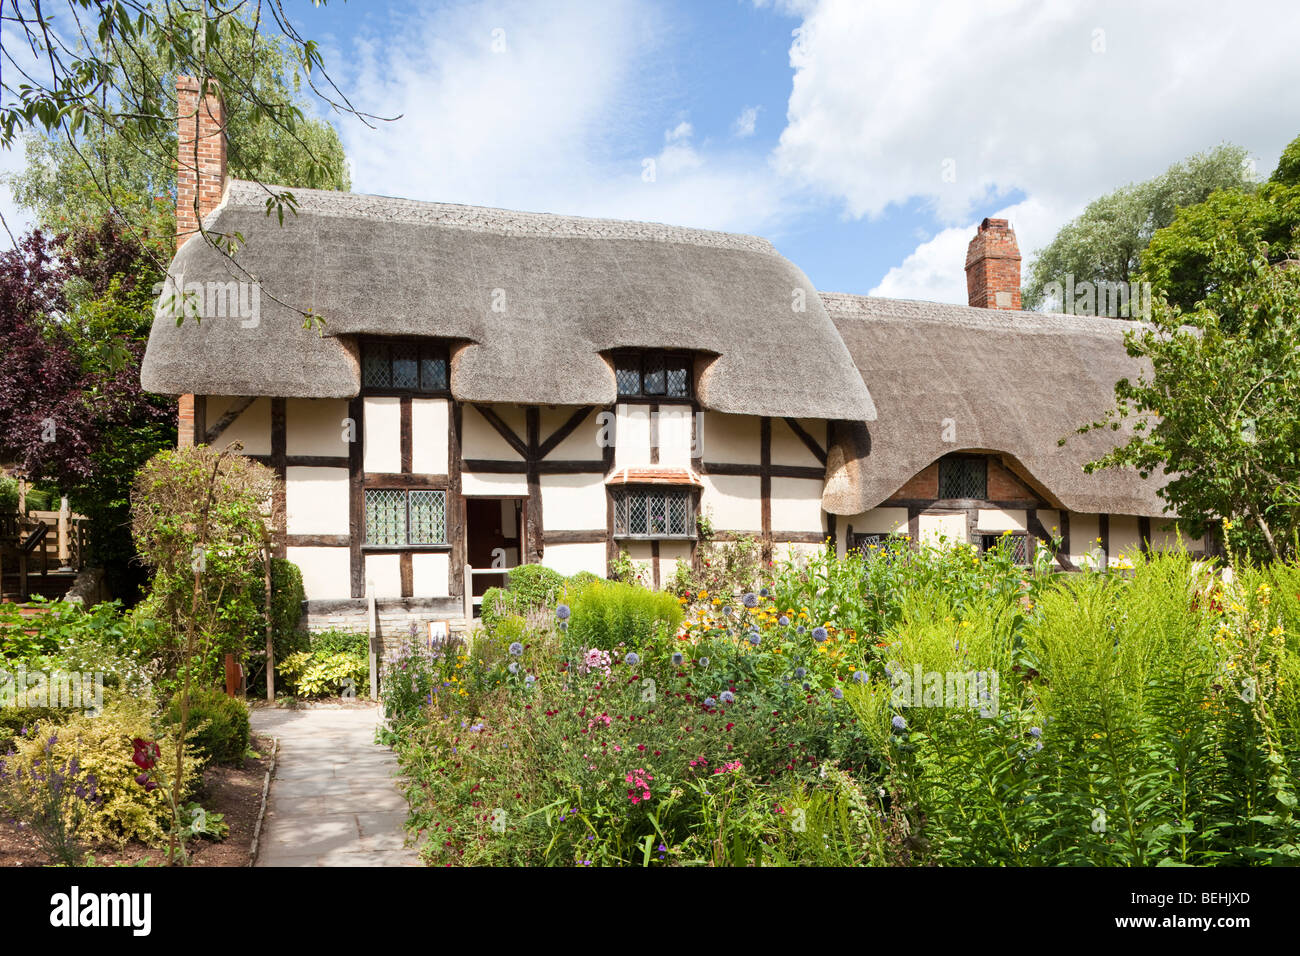 Casa de Anne Hathaway, Shottery, Stratford upon Avon, Warwickshire Reino Unido - Anne era la esposa de William Shakespeare. Foto de stock